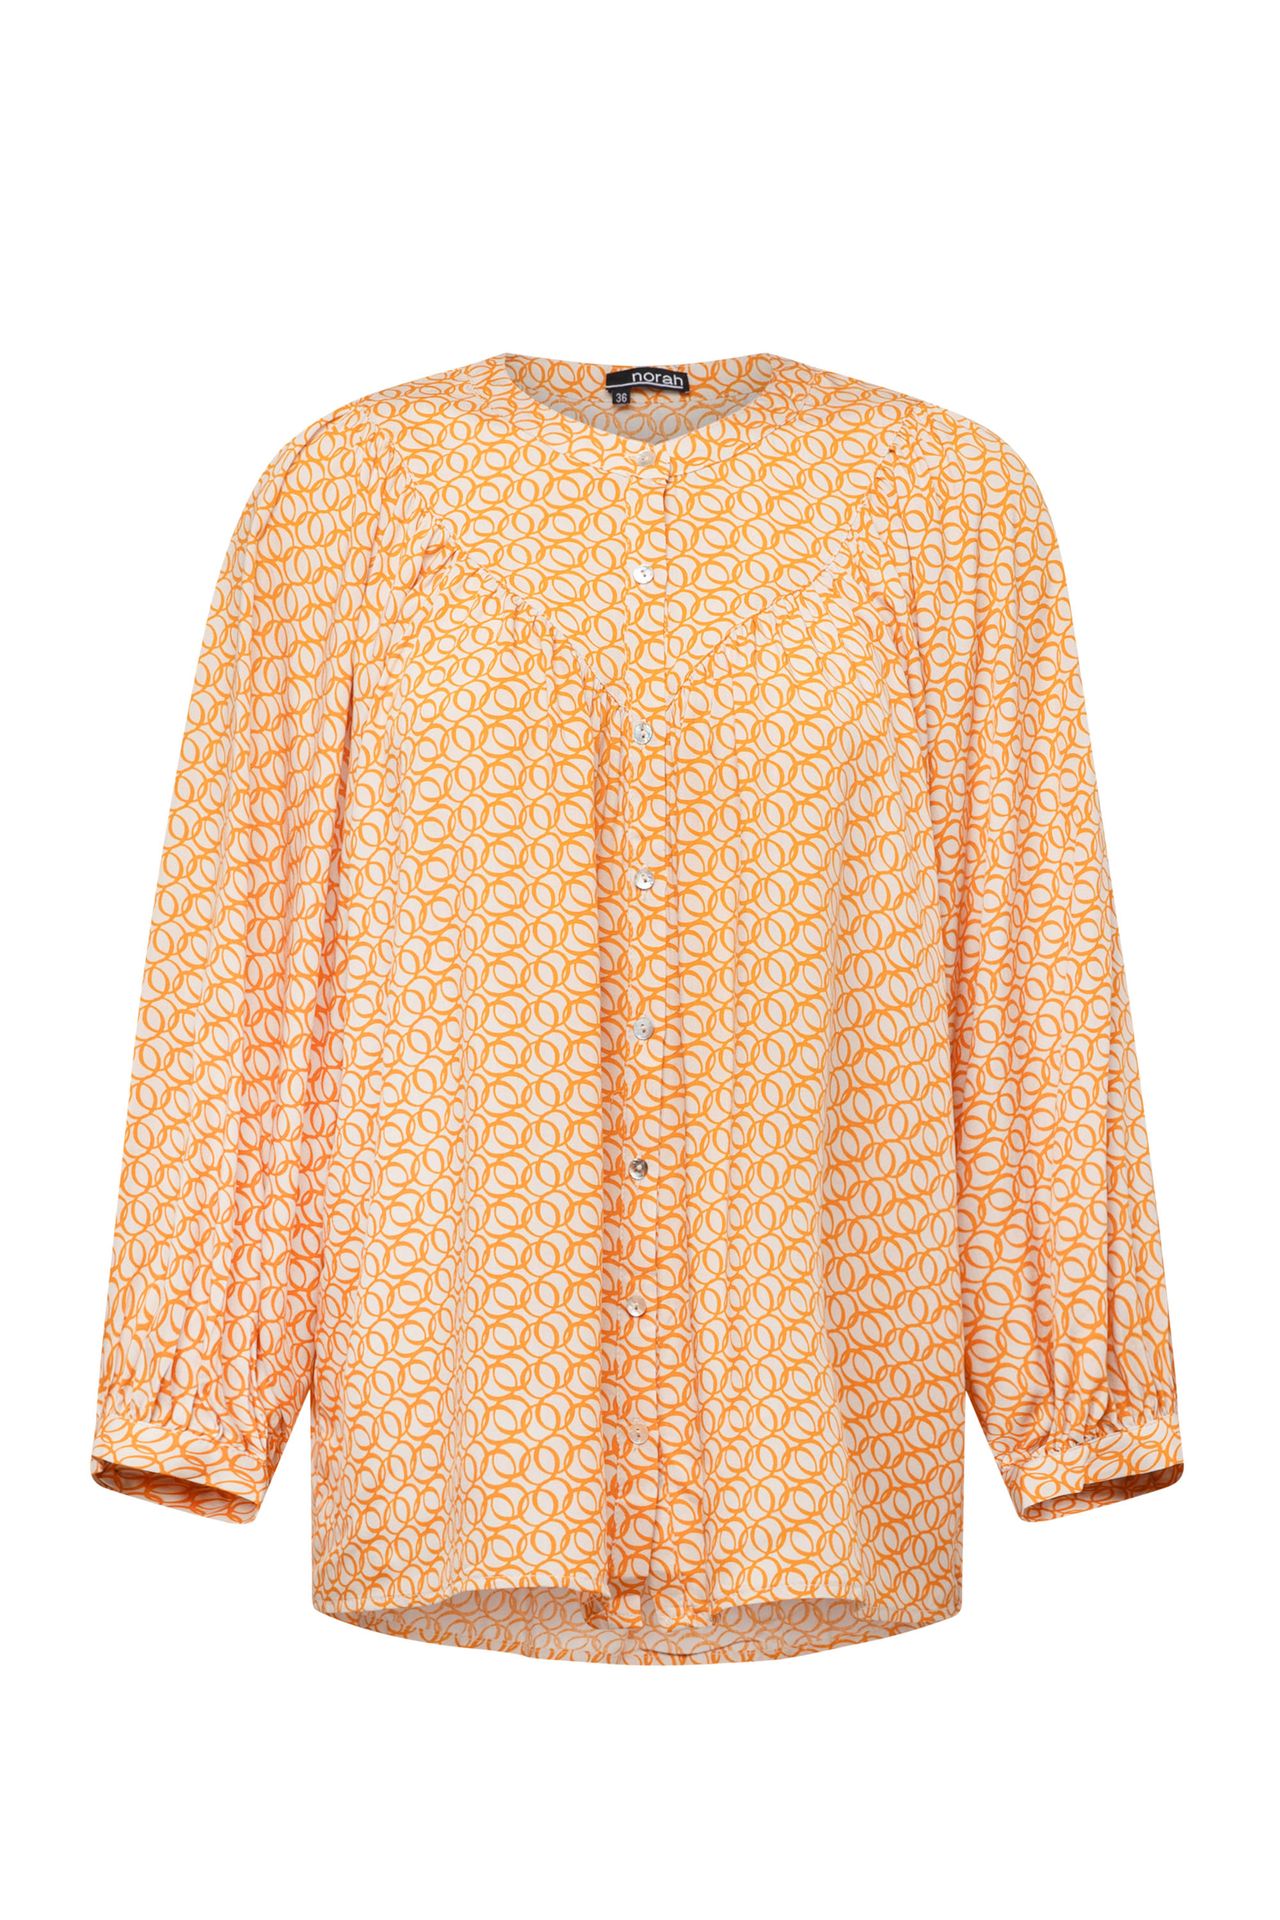 Norah Geplooide blouse oranje orange/ecru 213498-741